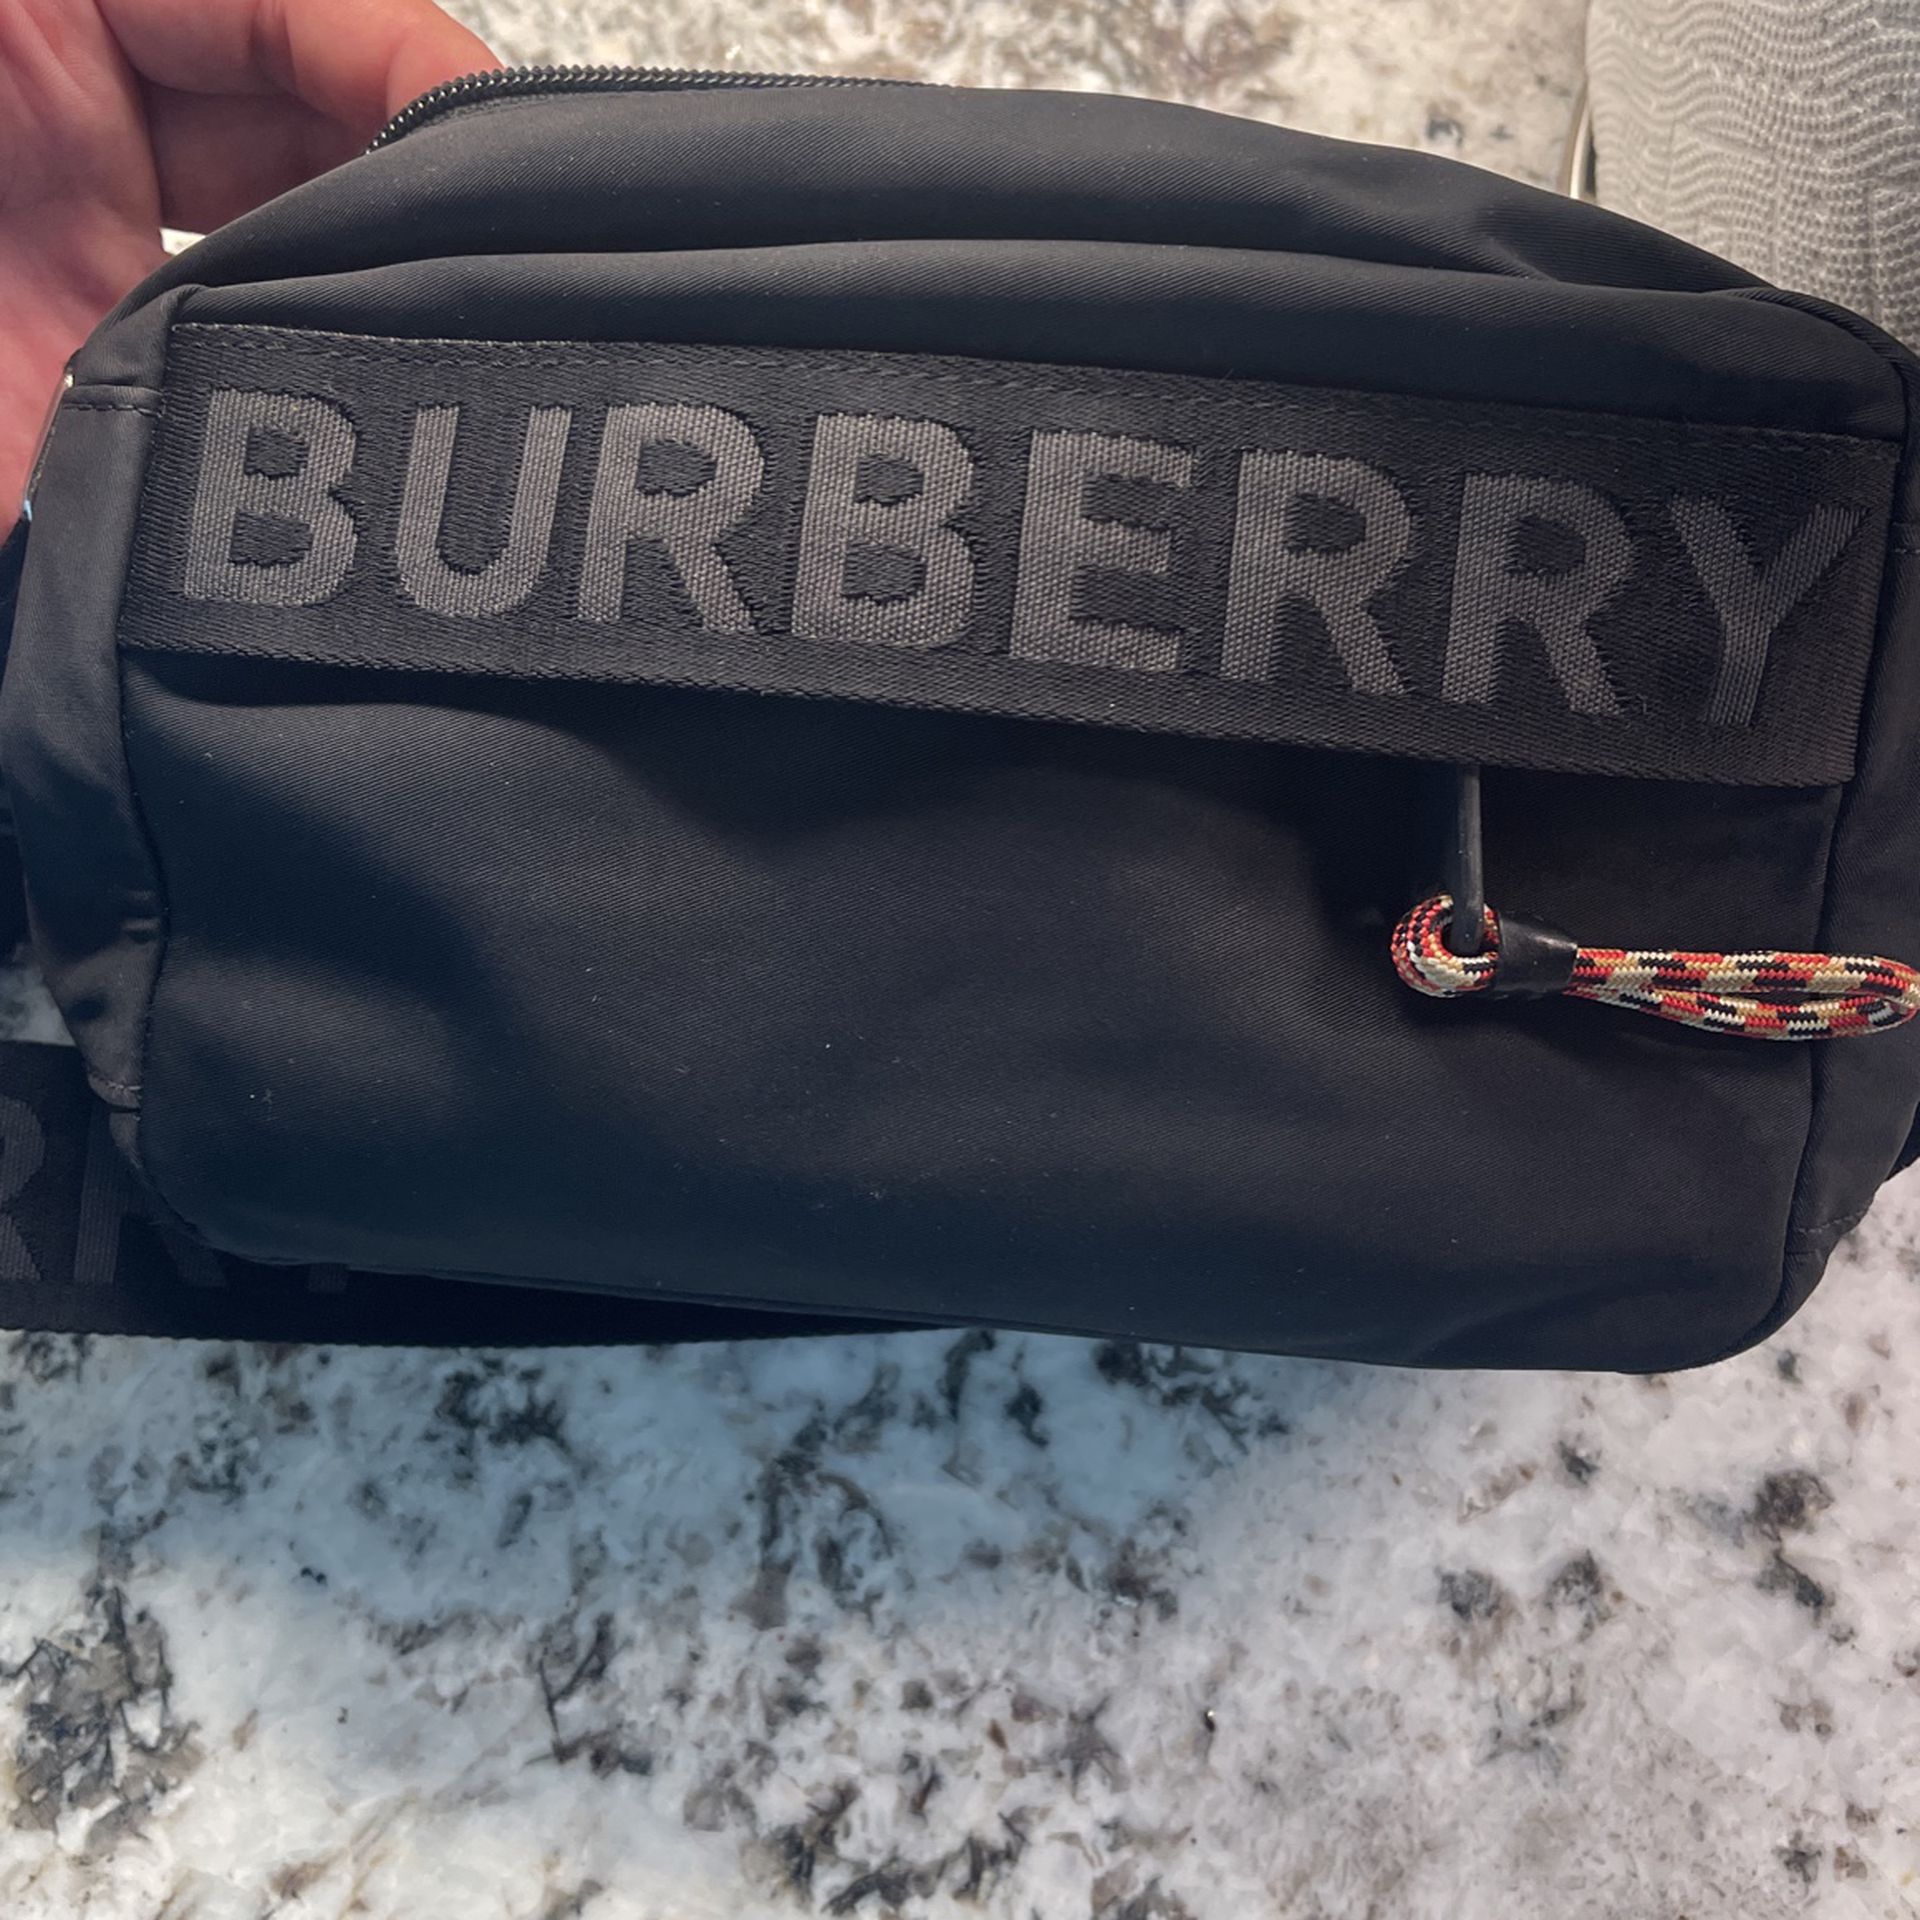 Burberry Crossbody Bag